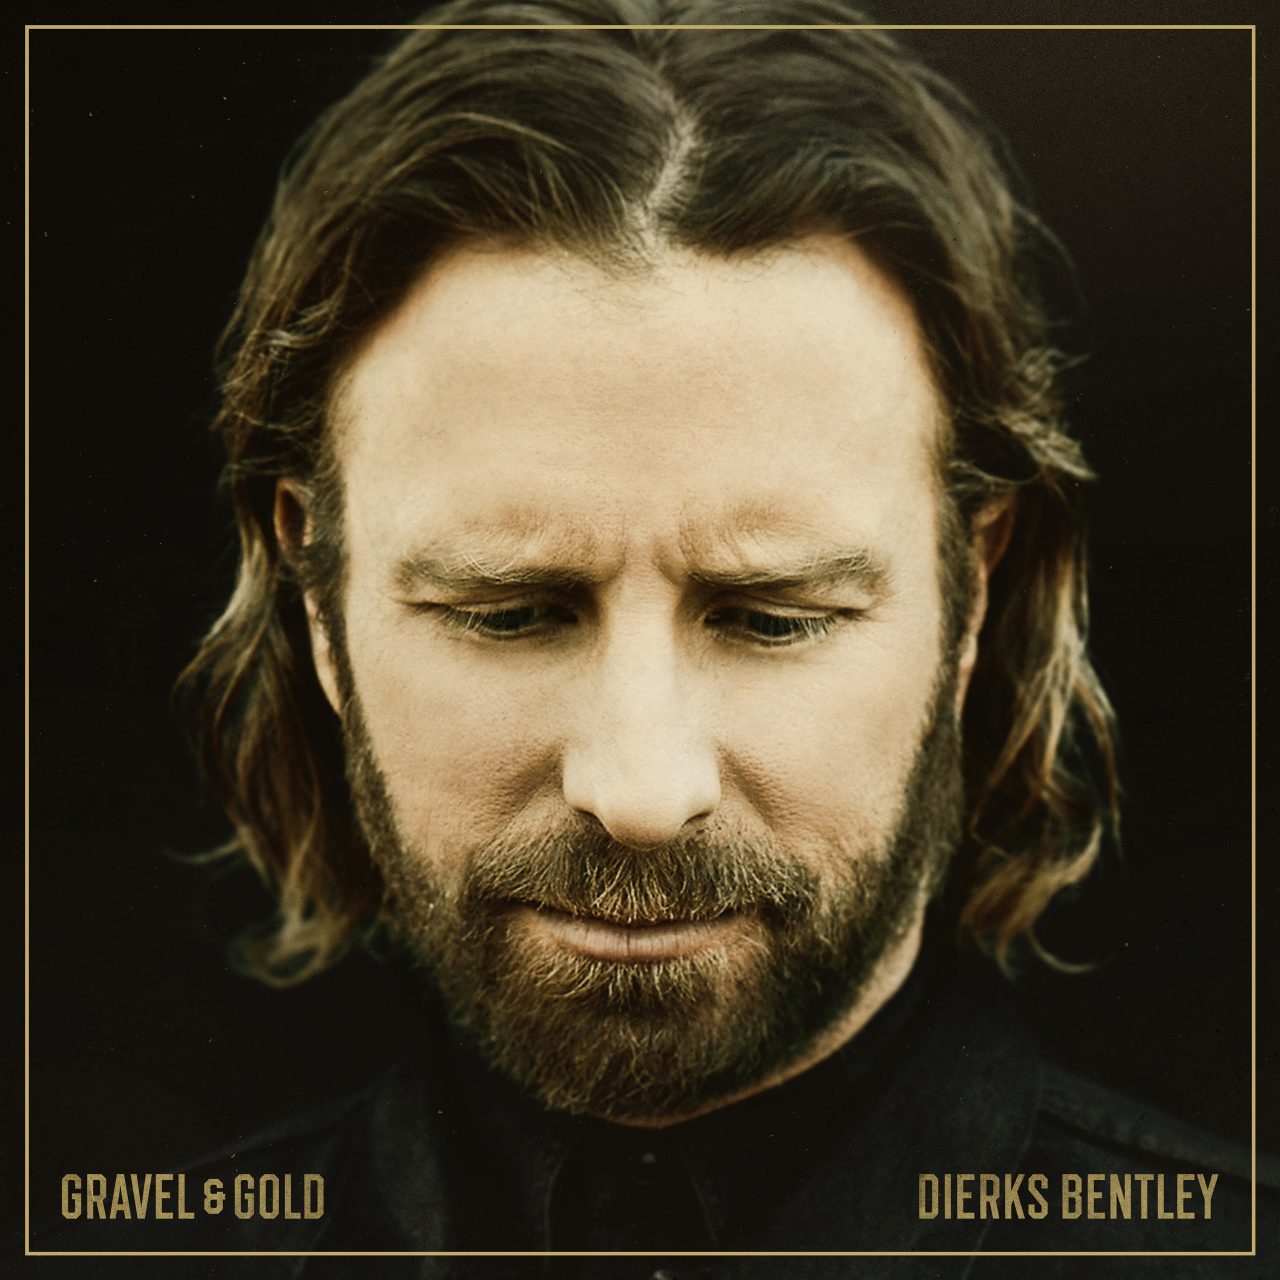 Dierks Bentley - Gravel & Gold cover album